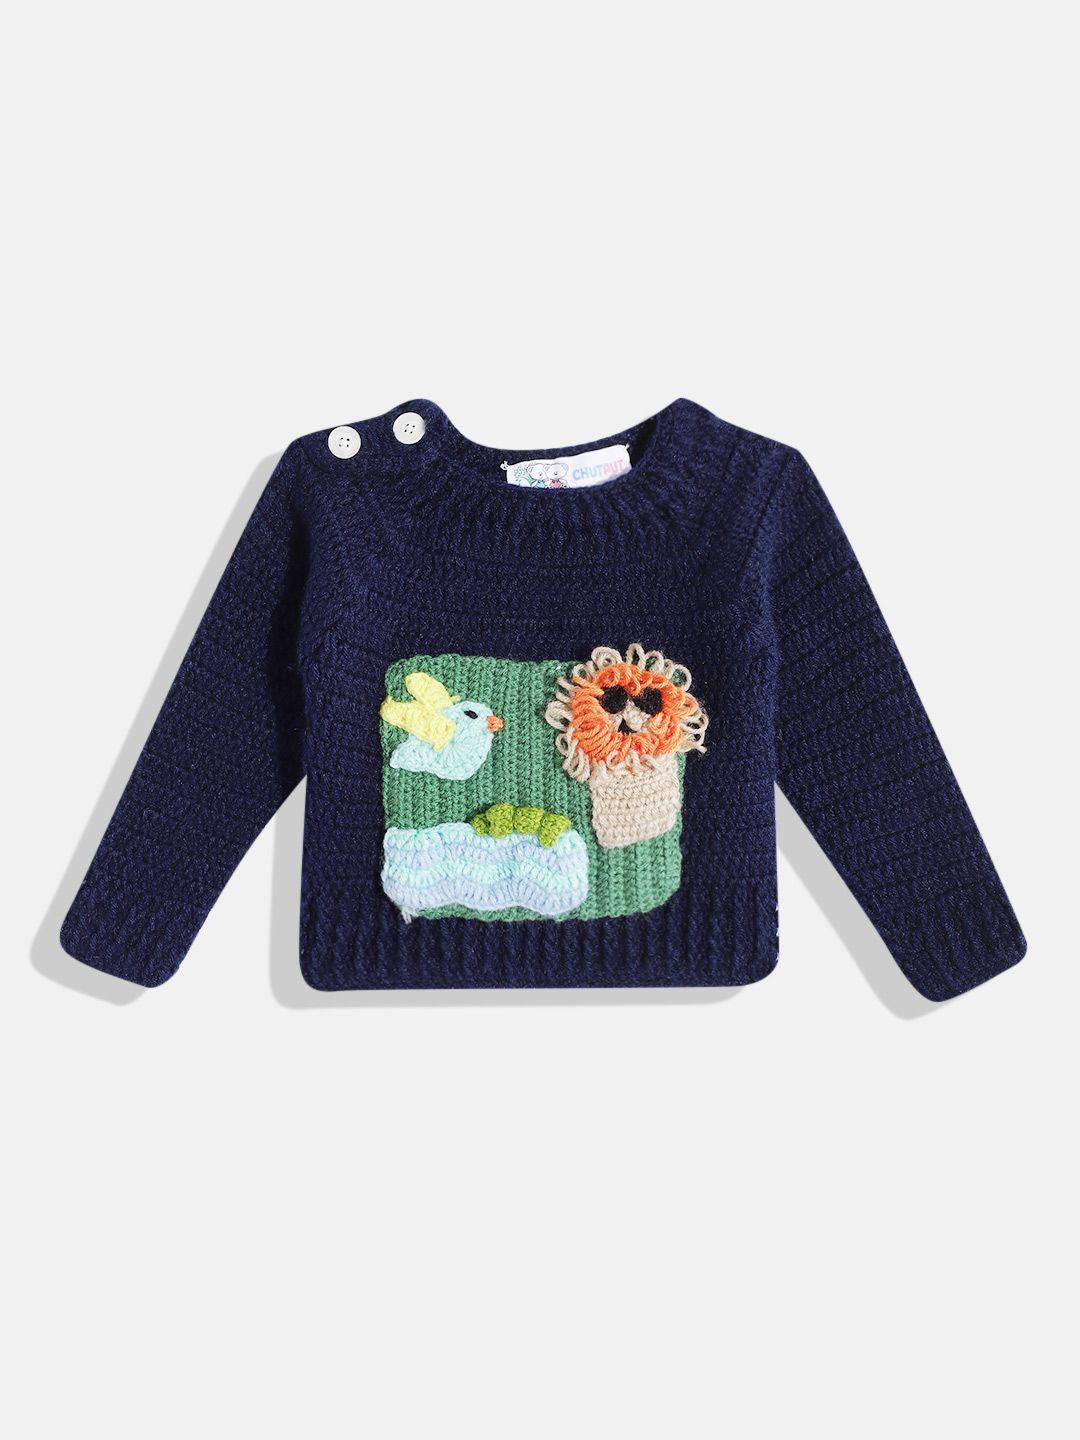 chutput unisex kids woollen pullover with embroidered detail